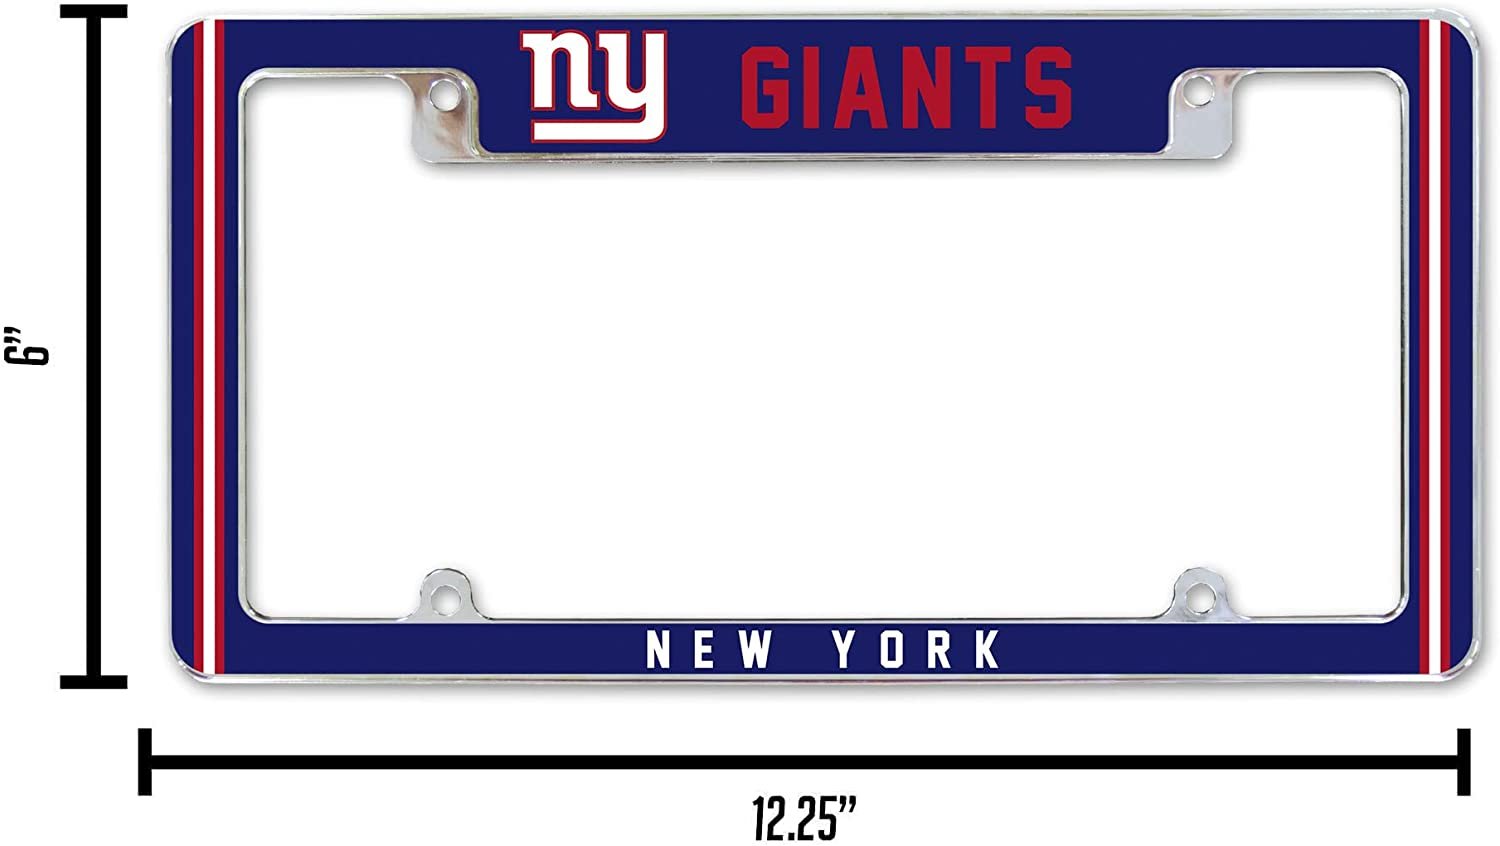 New York Giants Metal License Plate Frame Chrome Tag Cover Alternate Design 6x12 Inch